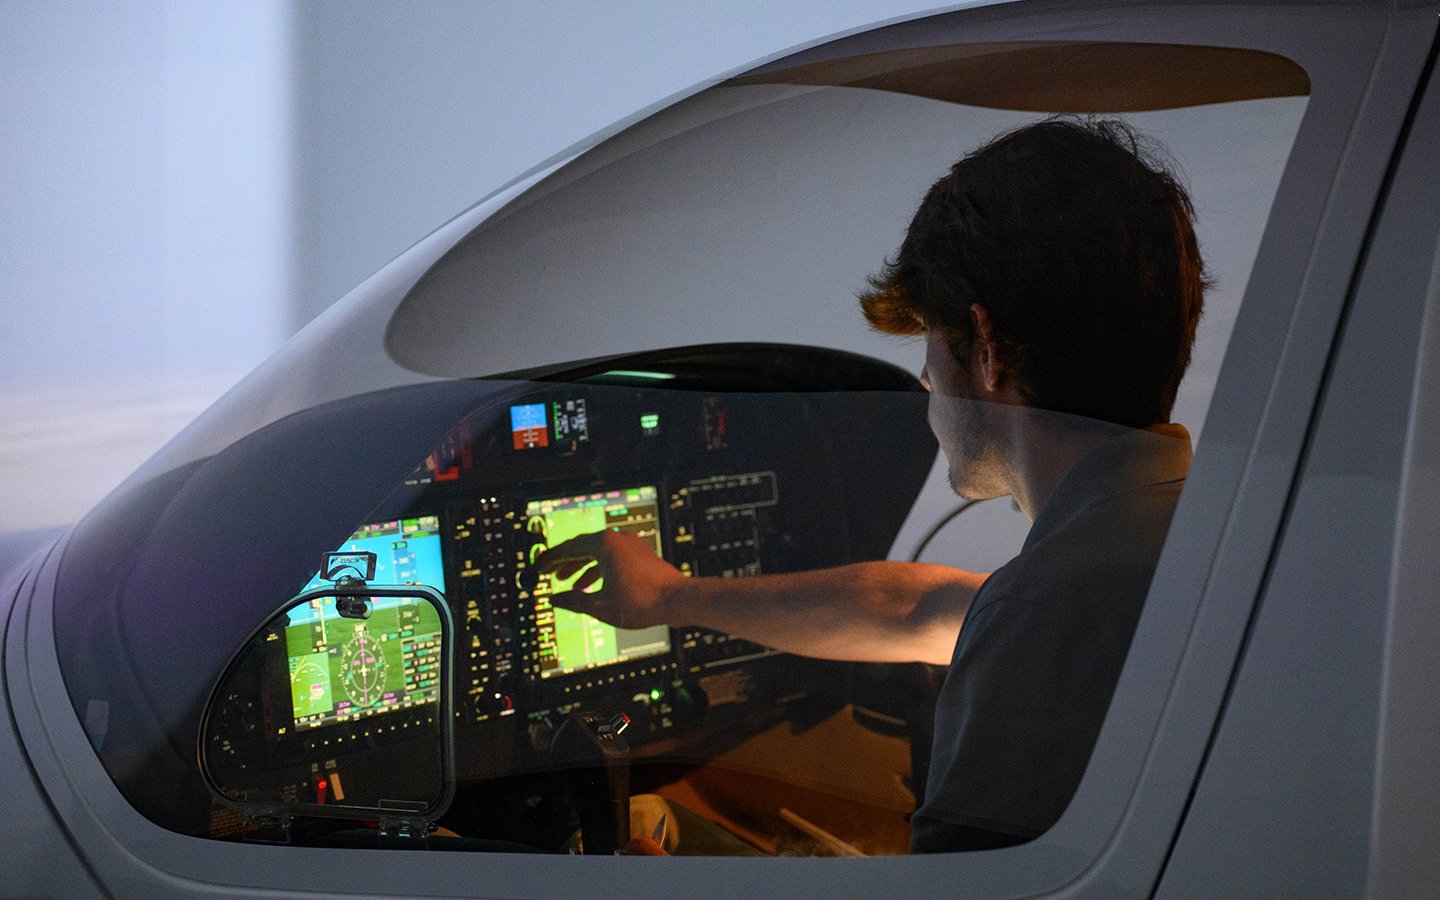 Diamond flight Simulator at the North Carolina location with student adjusting touchscreen controls